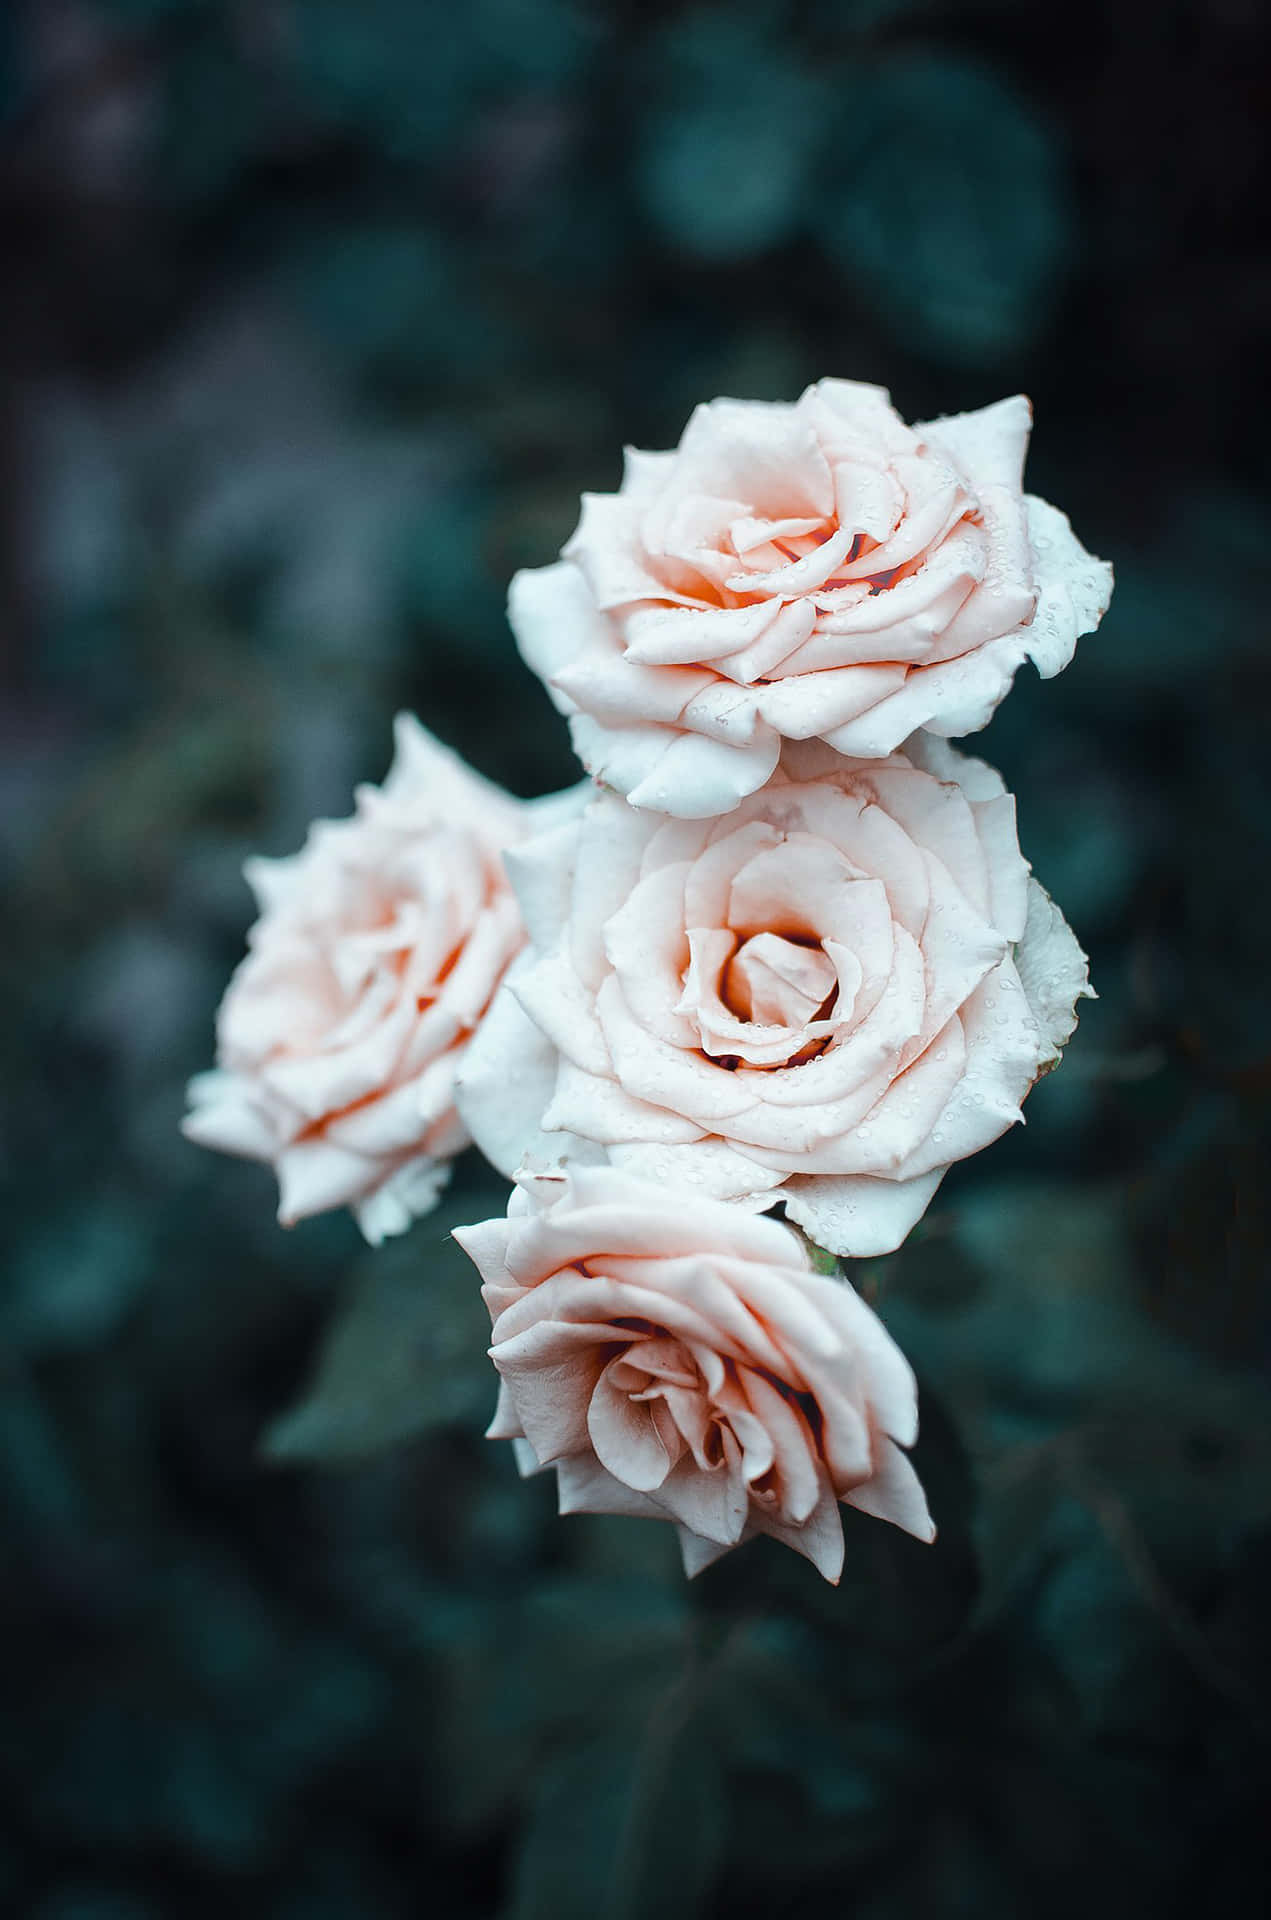 A ravishing bouquet of white roses